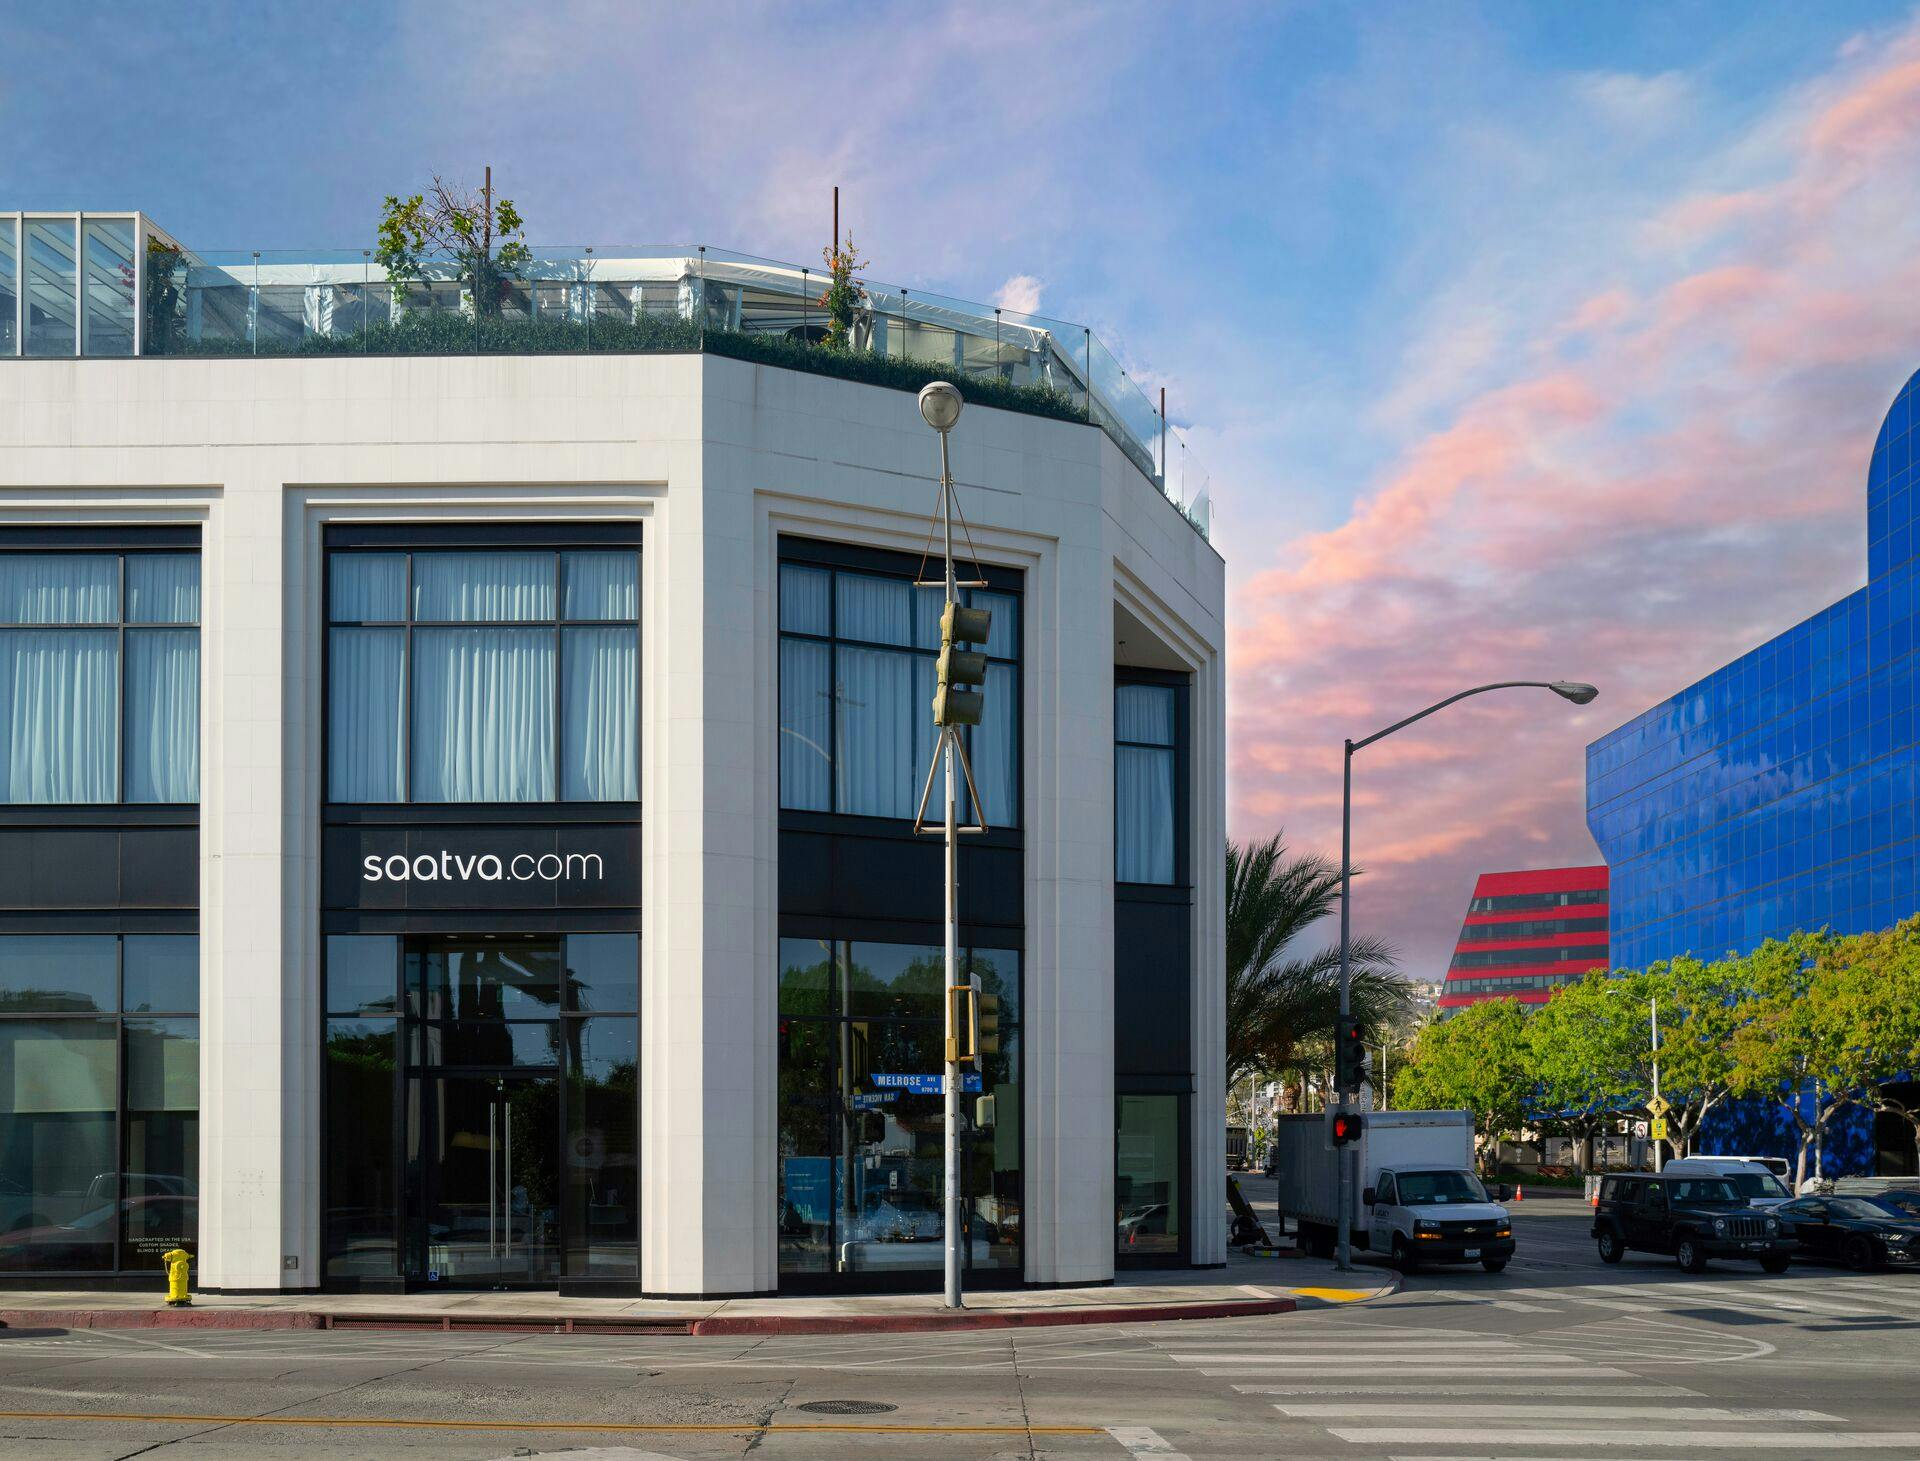 The Saatva Los Angeles Storefront